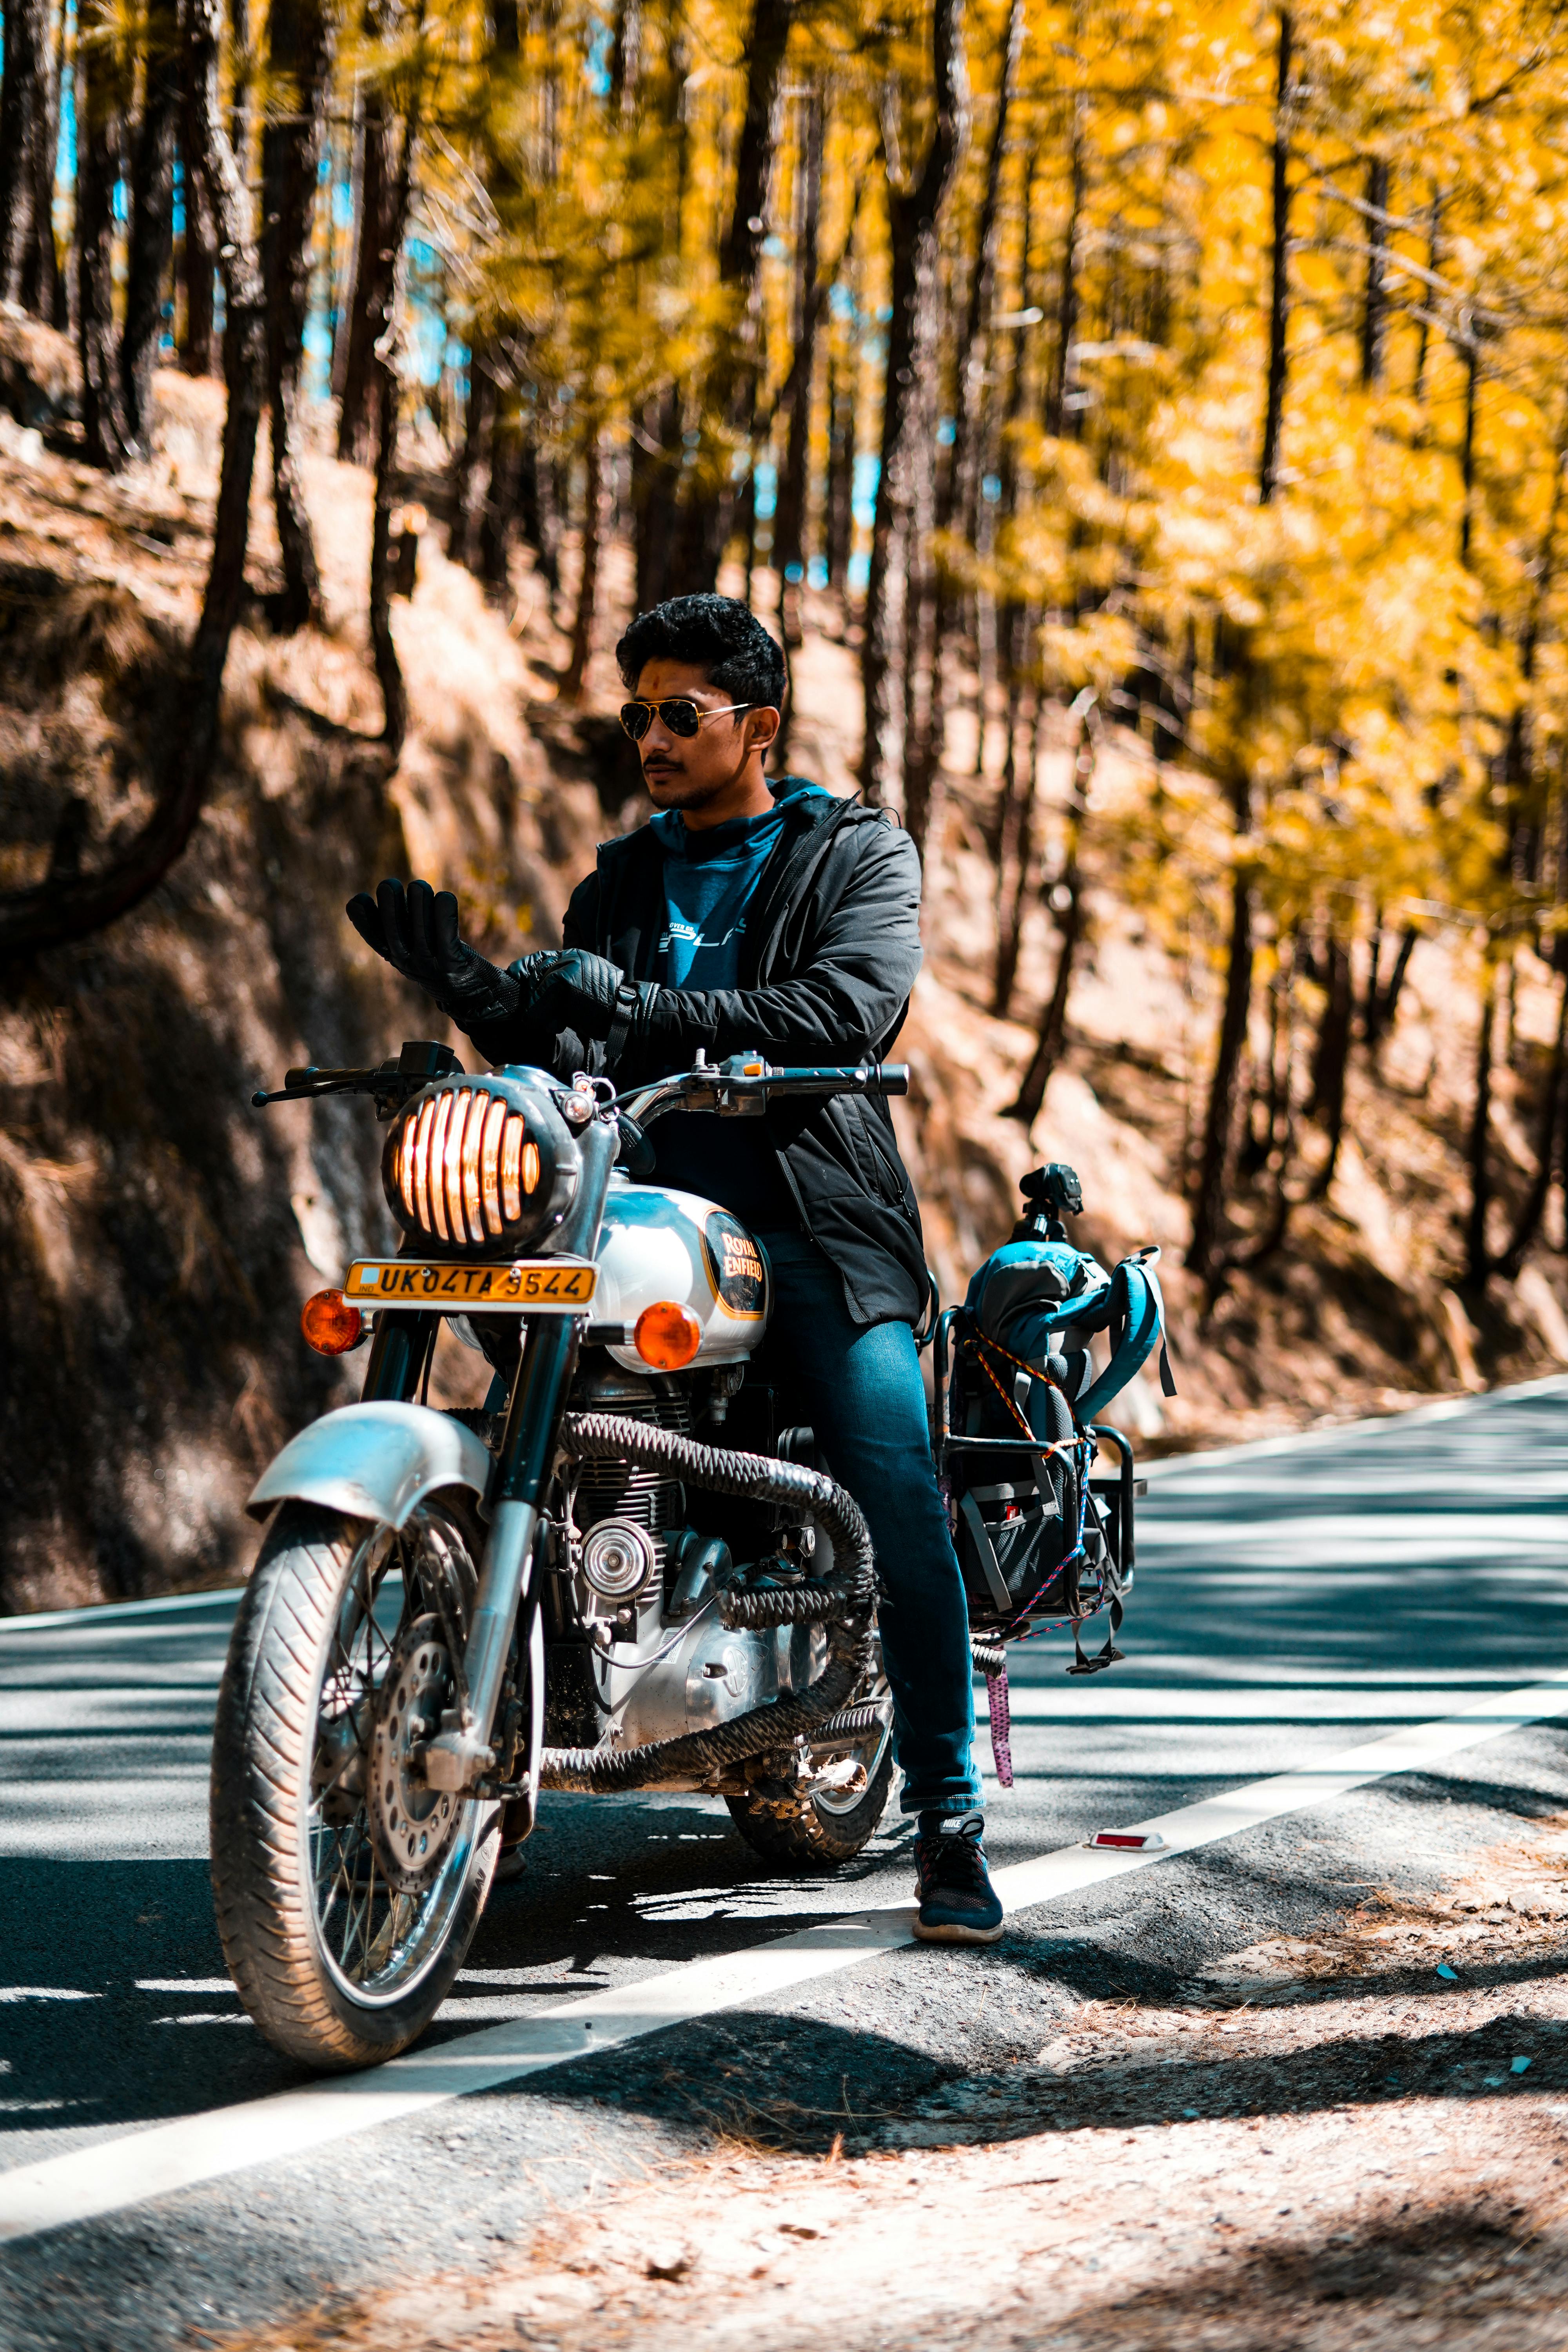 Bike poses | Motorcycle photo shoot, Biker photography, Bike photoshoot